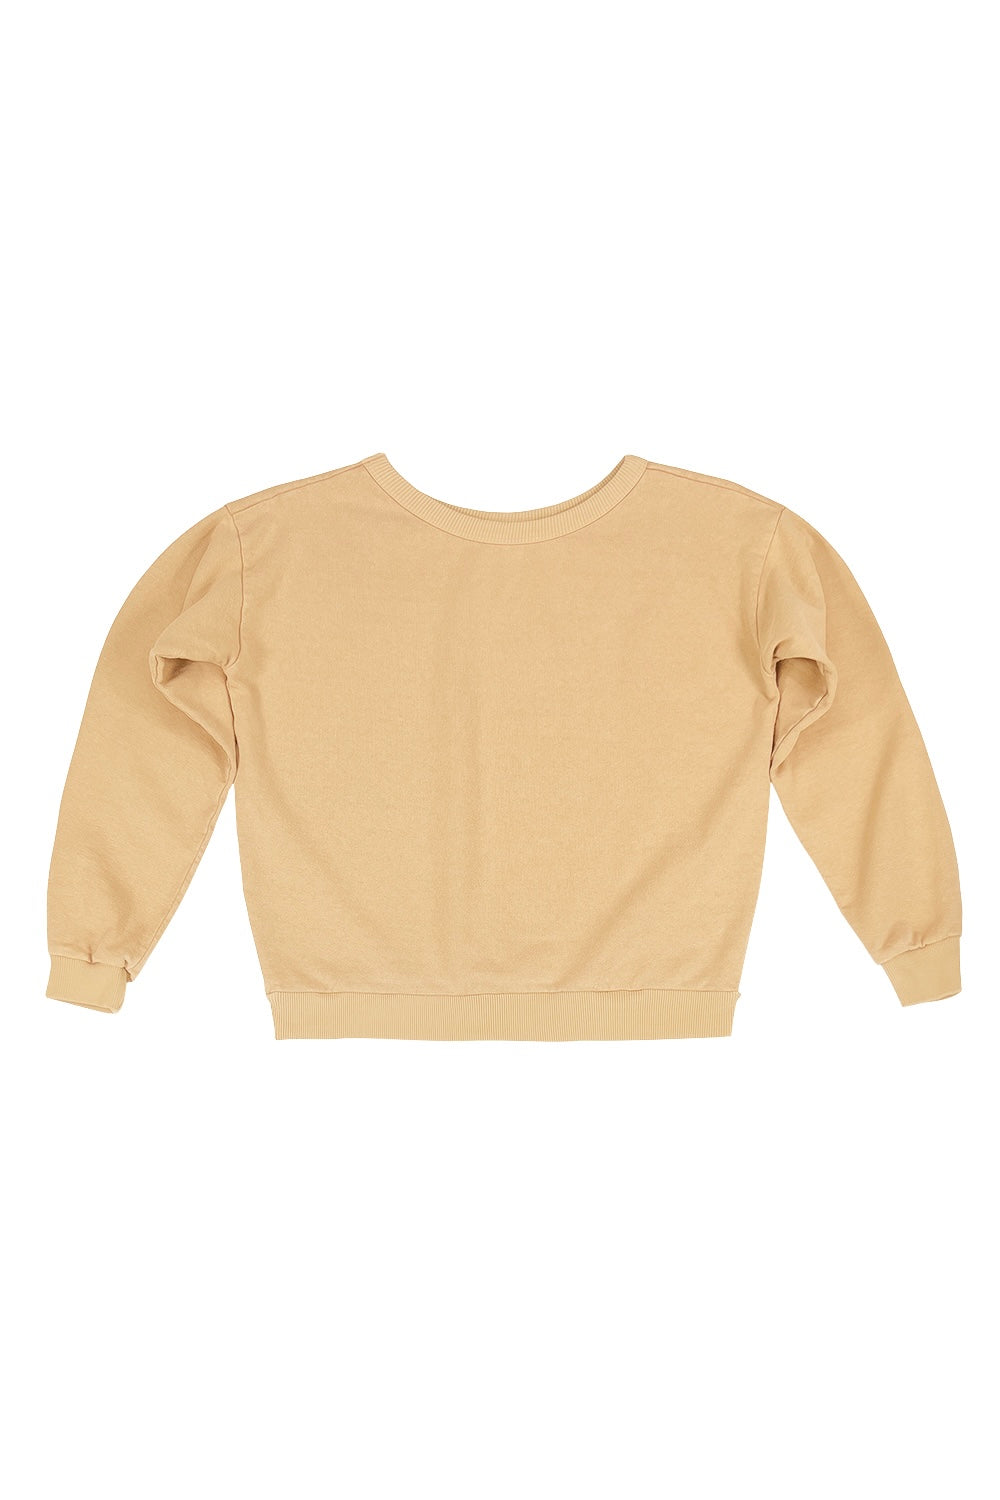 Laguna Cropped Sweatshirt | Jungmaven Hemp Clothing & Accessories / Color: Oat Milk